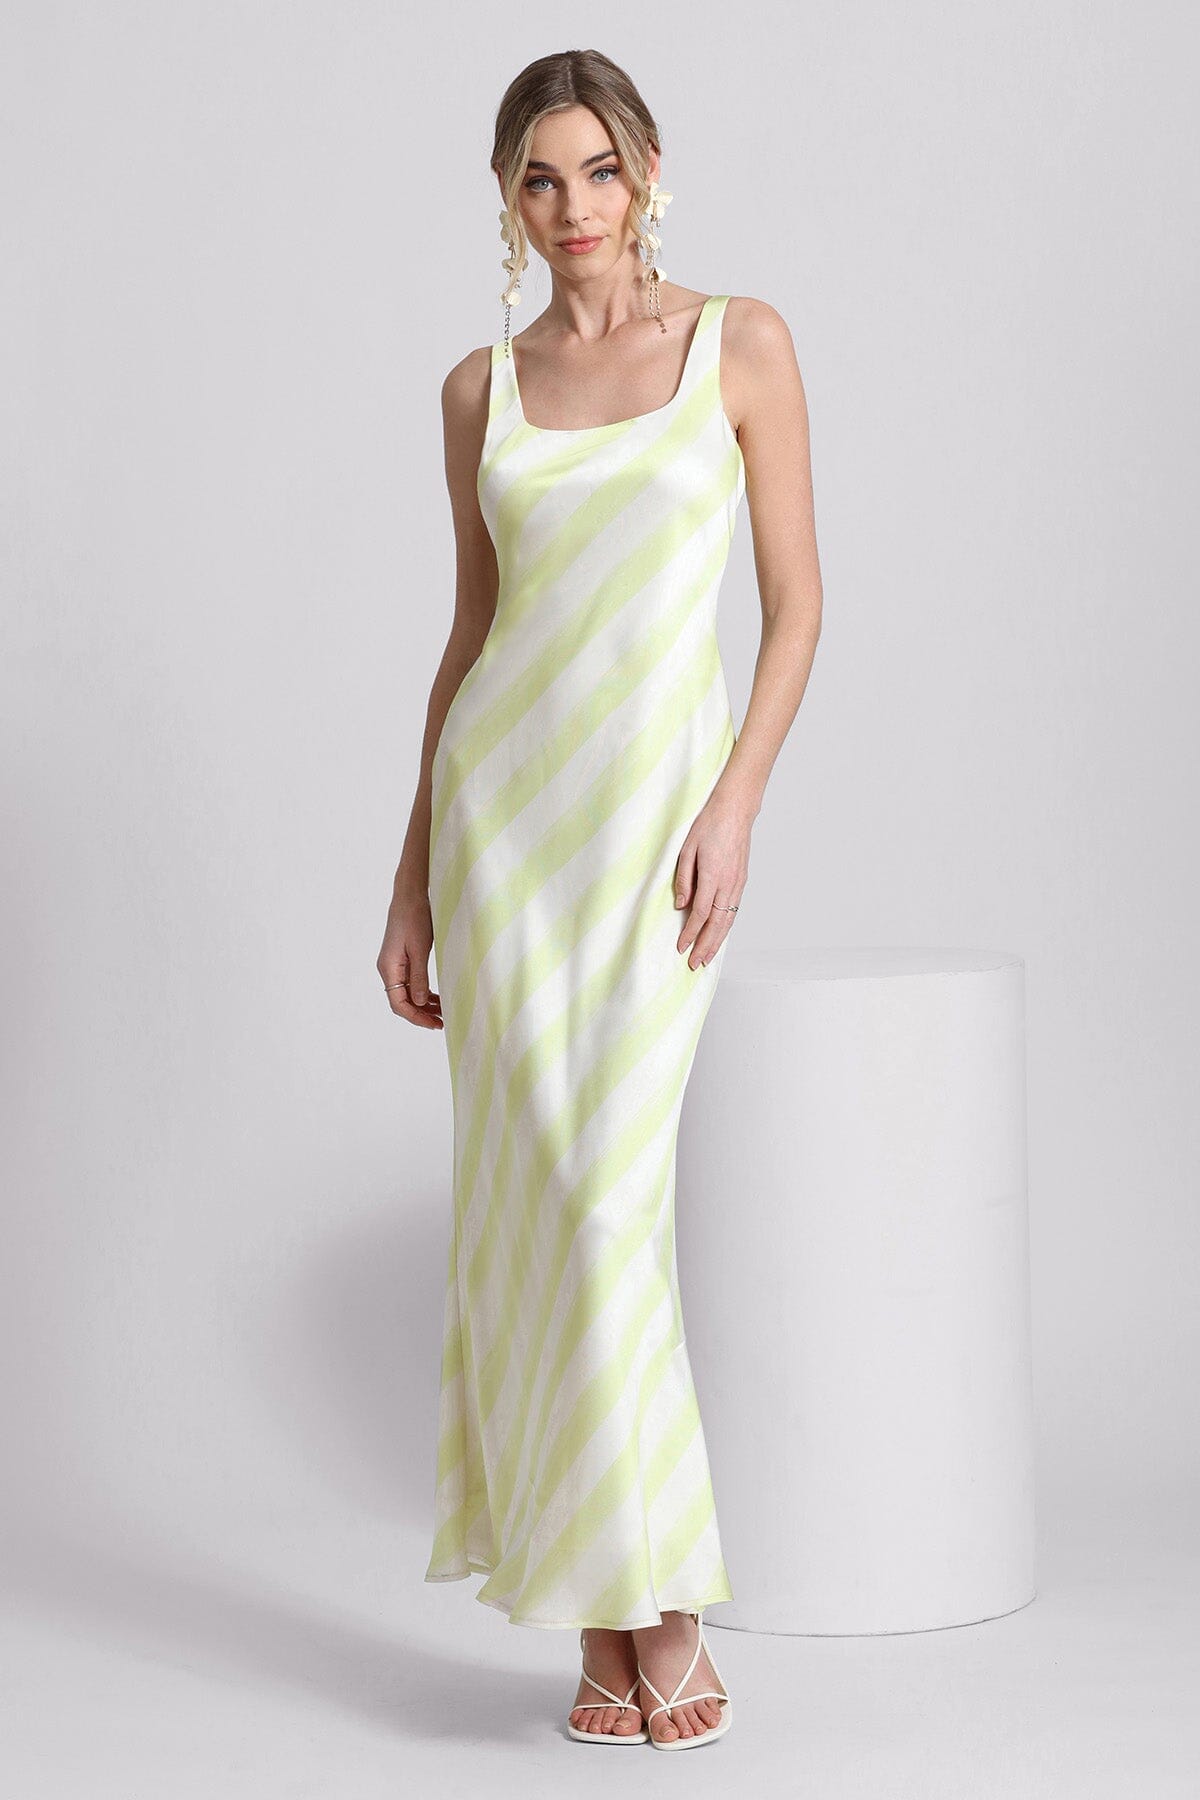 lime green white striped satin bias cut maxi slip dress for ladies - designer fashion dresses by Avec Les Filles